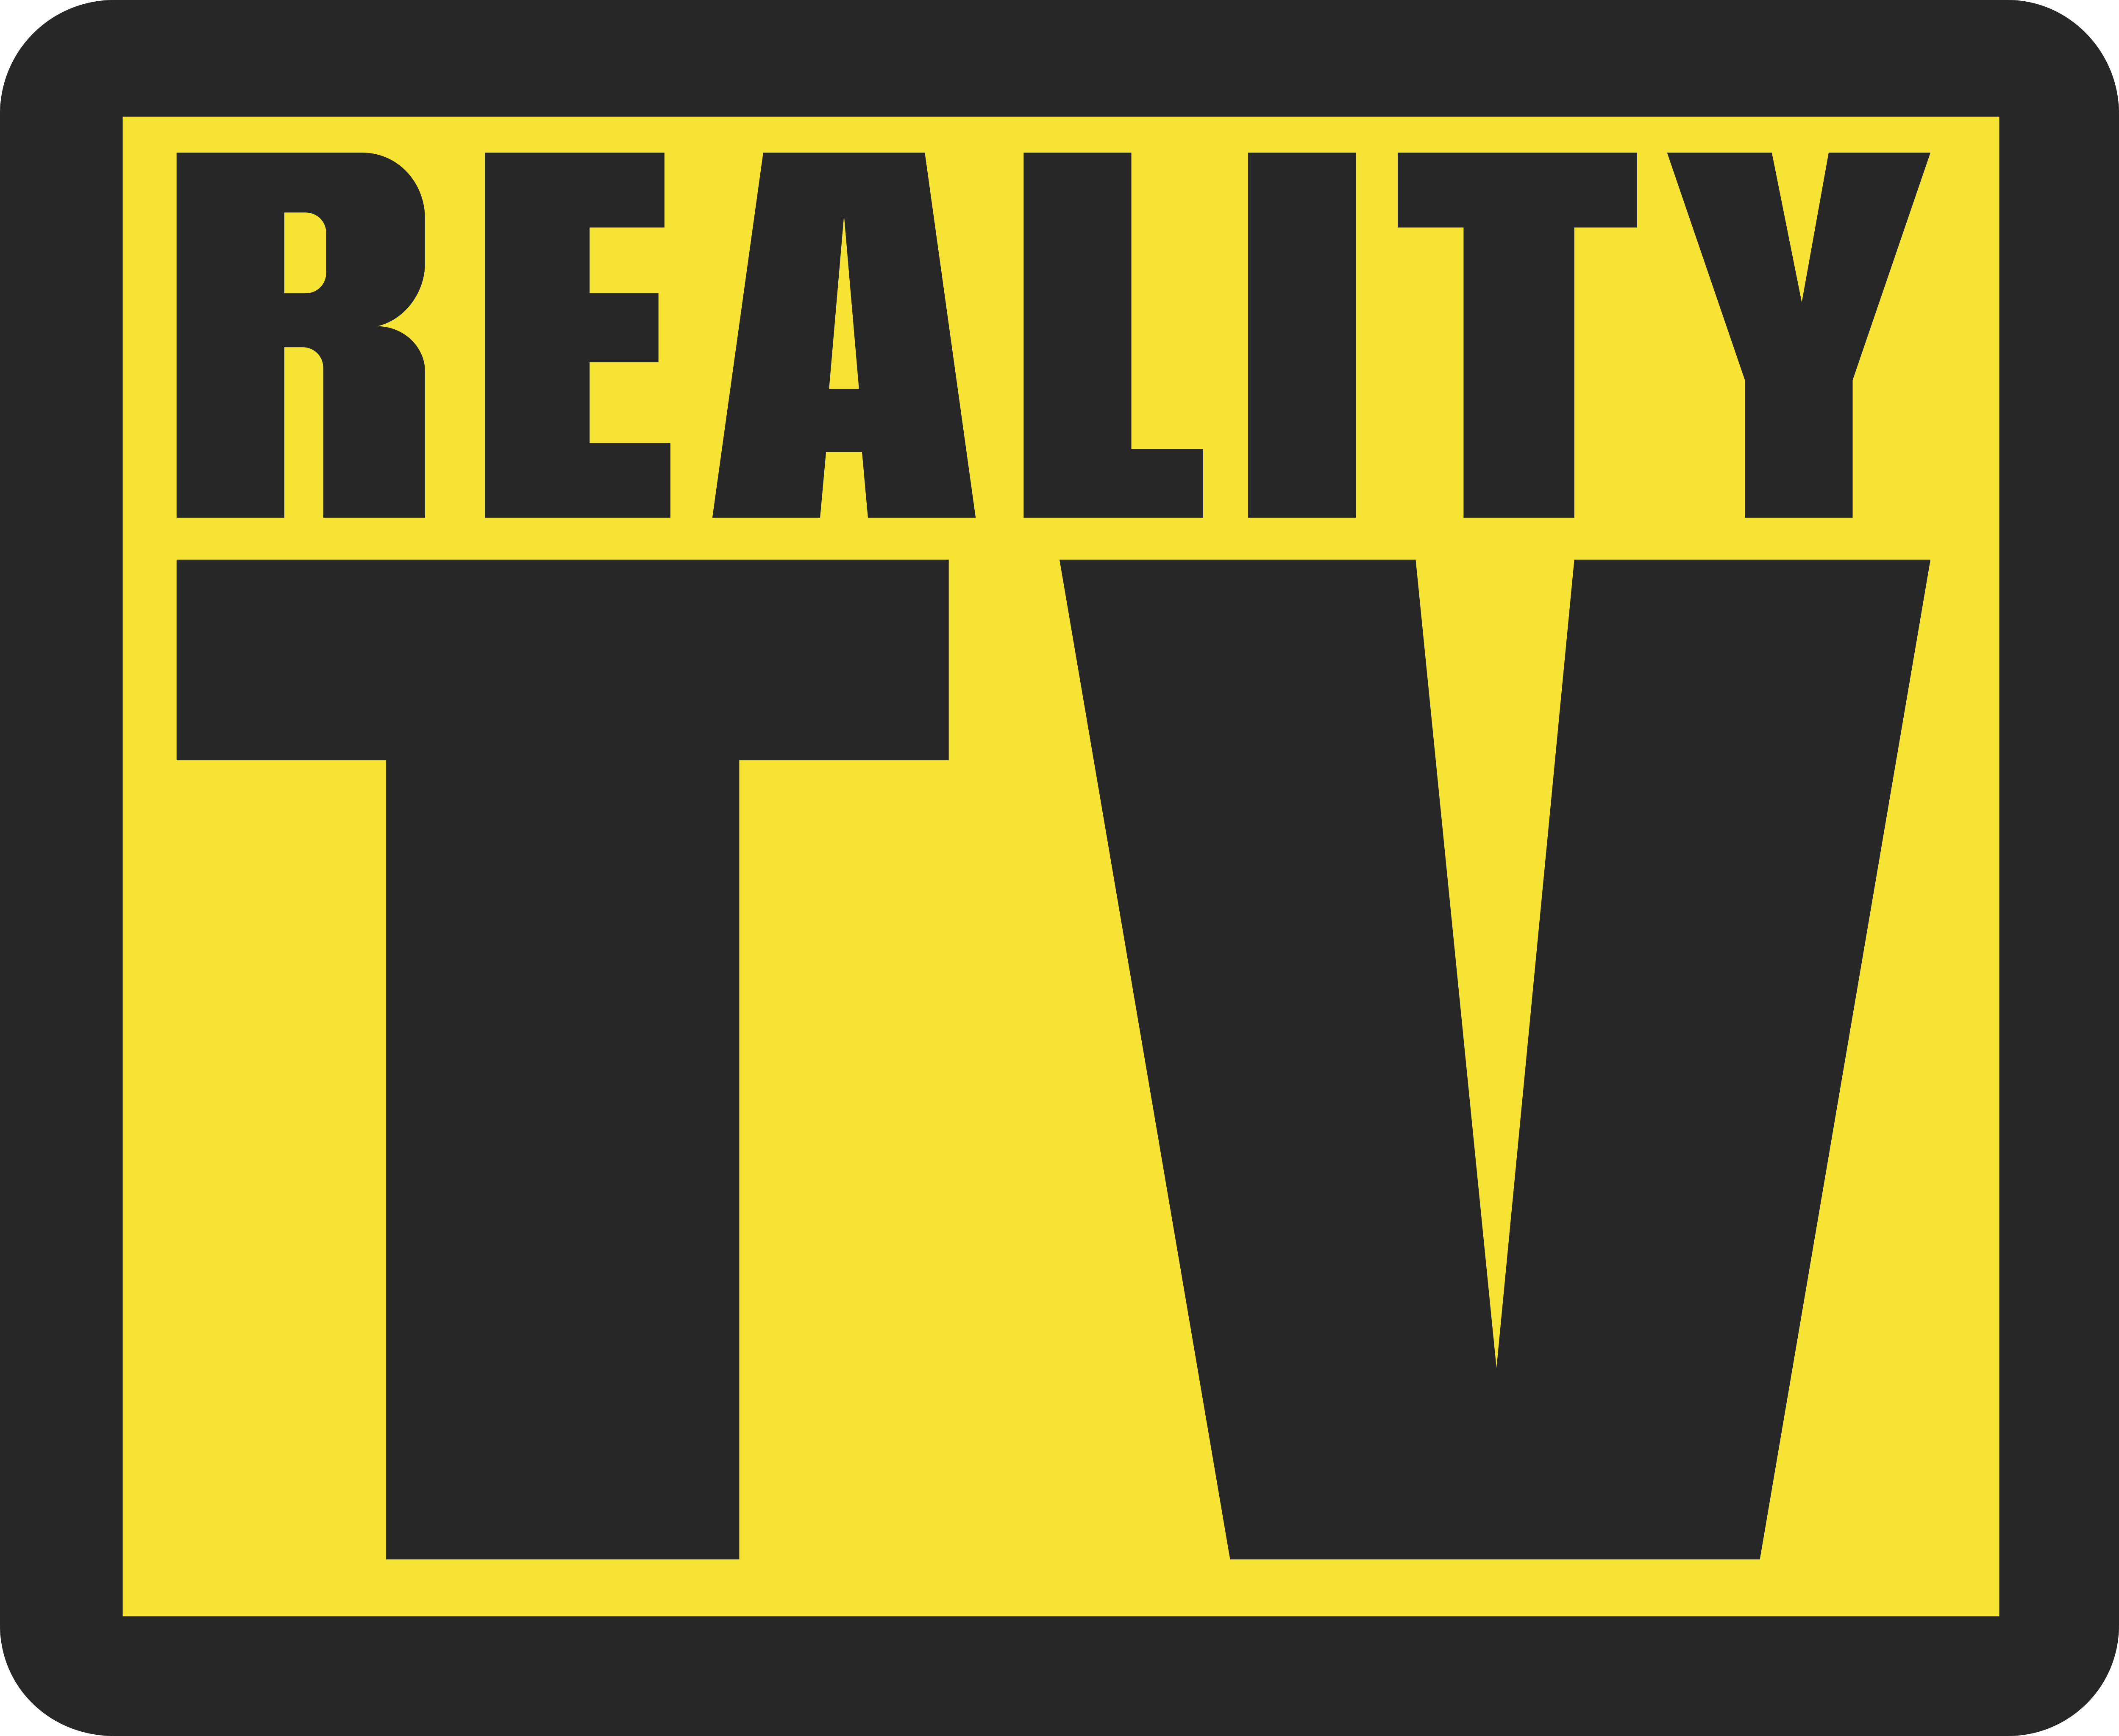 Reality Tv Logos Download